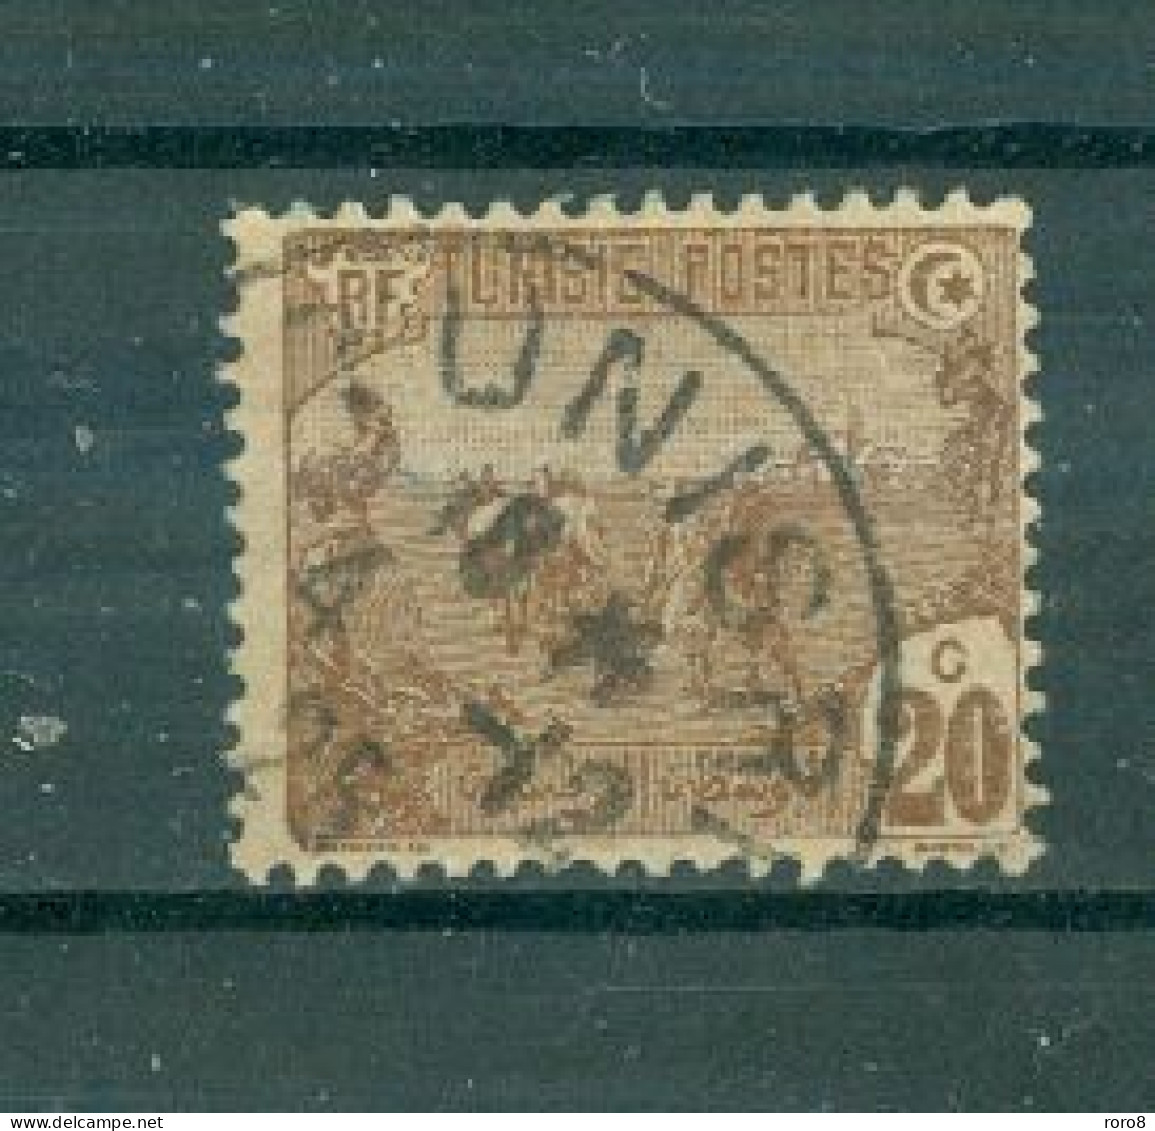 TUNISIE - N°34 Oblitéré - Laboureurs. - Used Stamps